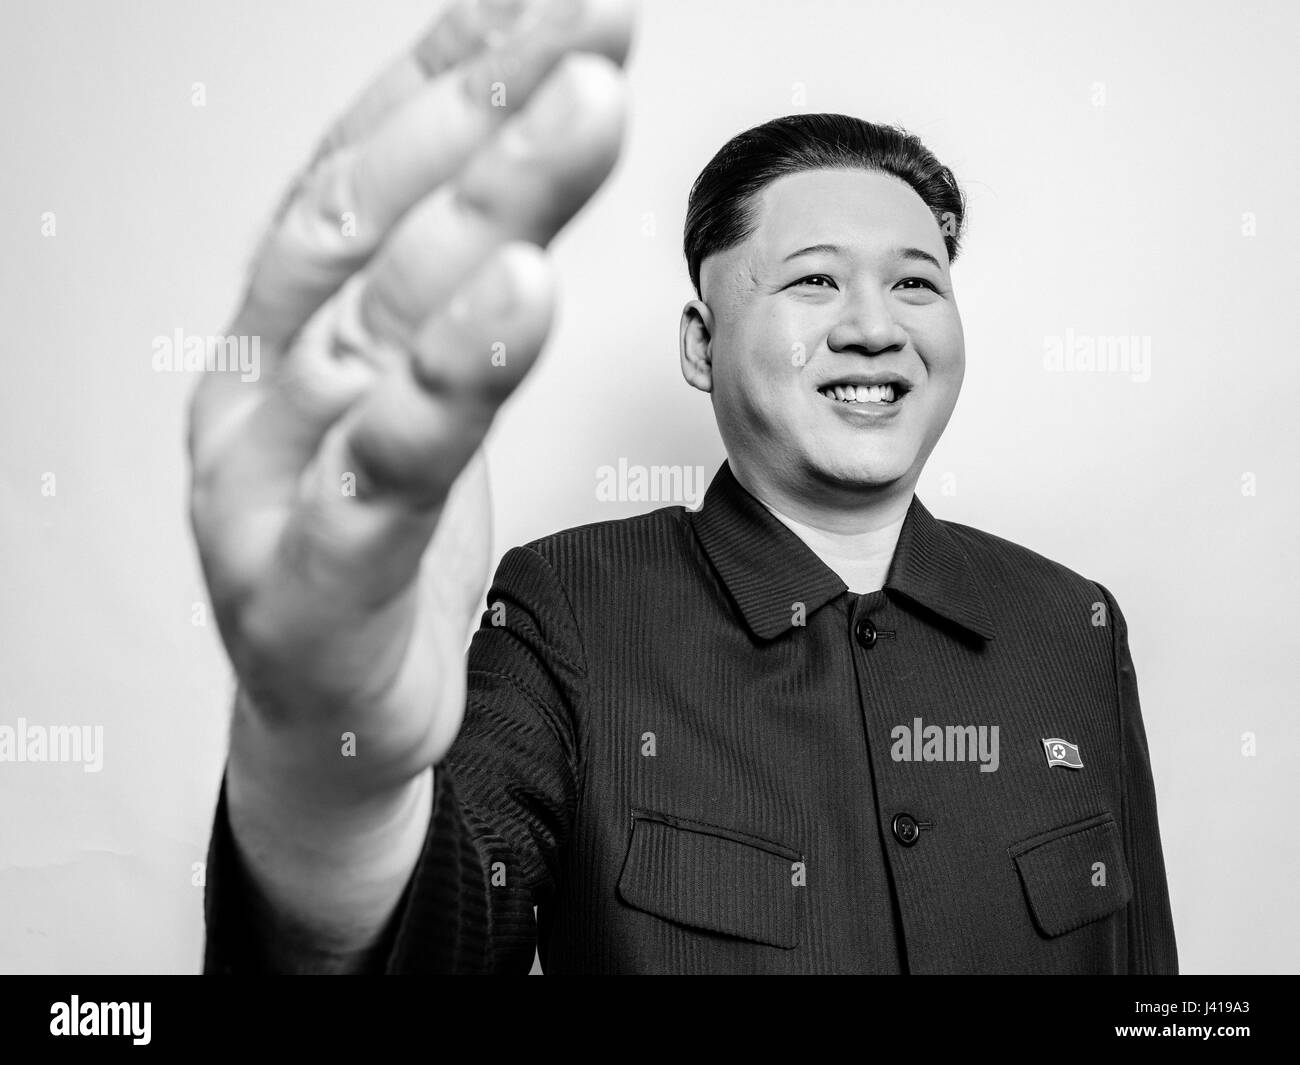 Supreme Leader of North Korea Kim Jong Un lookalike during his visit to Hong Kong.  Kim Jong-Un posed for studio portraits and met Obama and Trump. Stock Photo